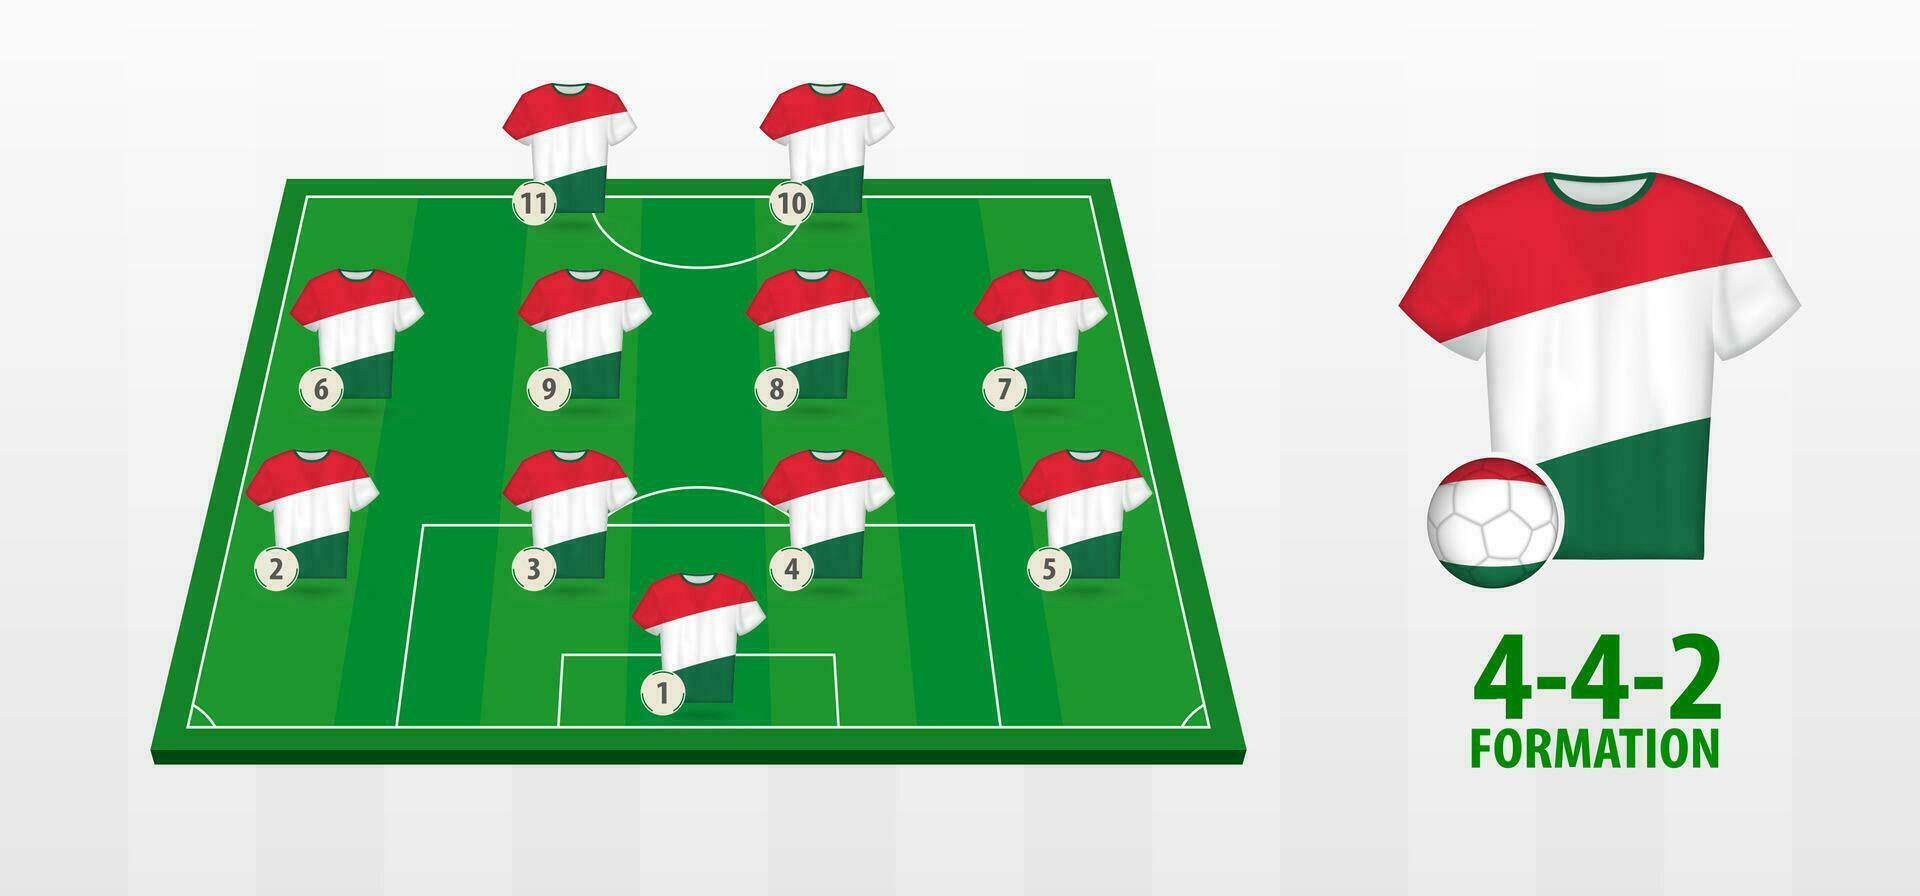 Hungary National Football Team Formation on Football Field. vector